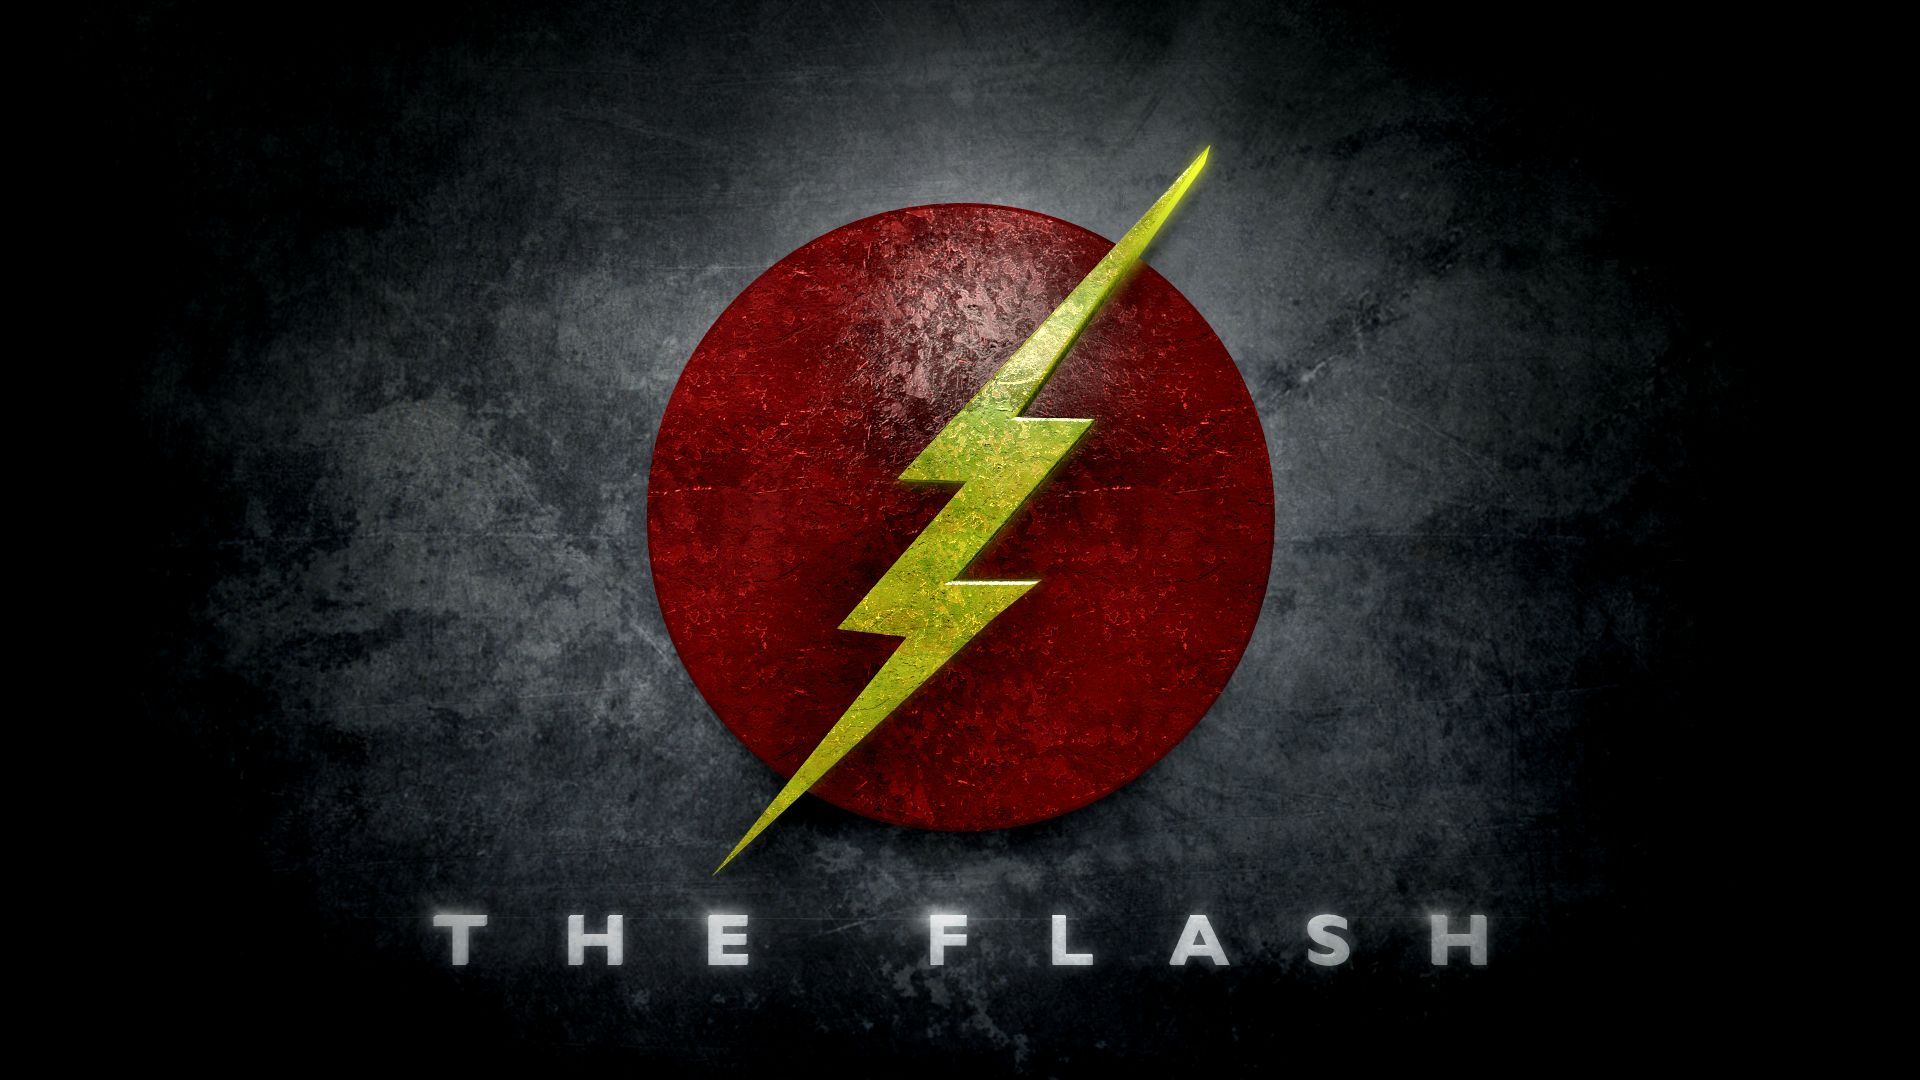 The Flash Logo Wallpaper Hd image gallery 1920x1080